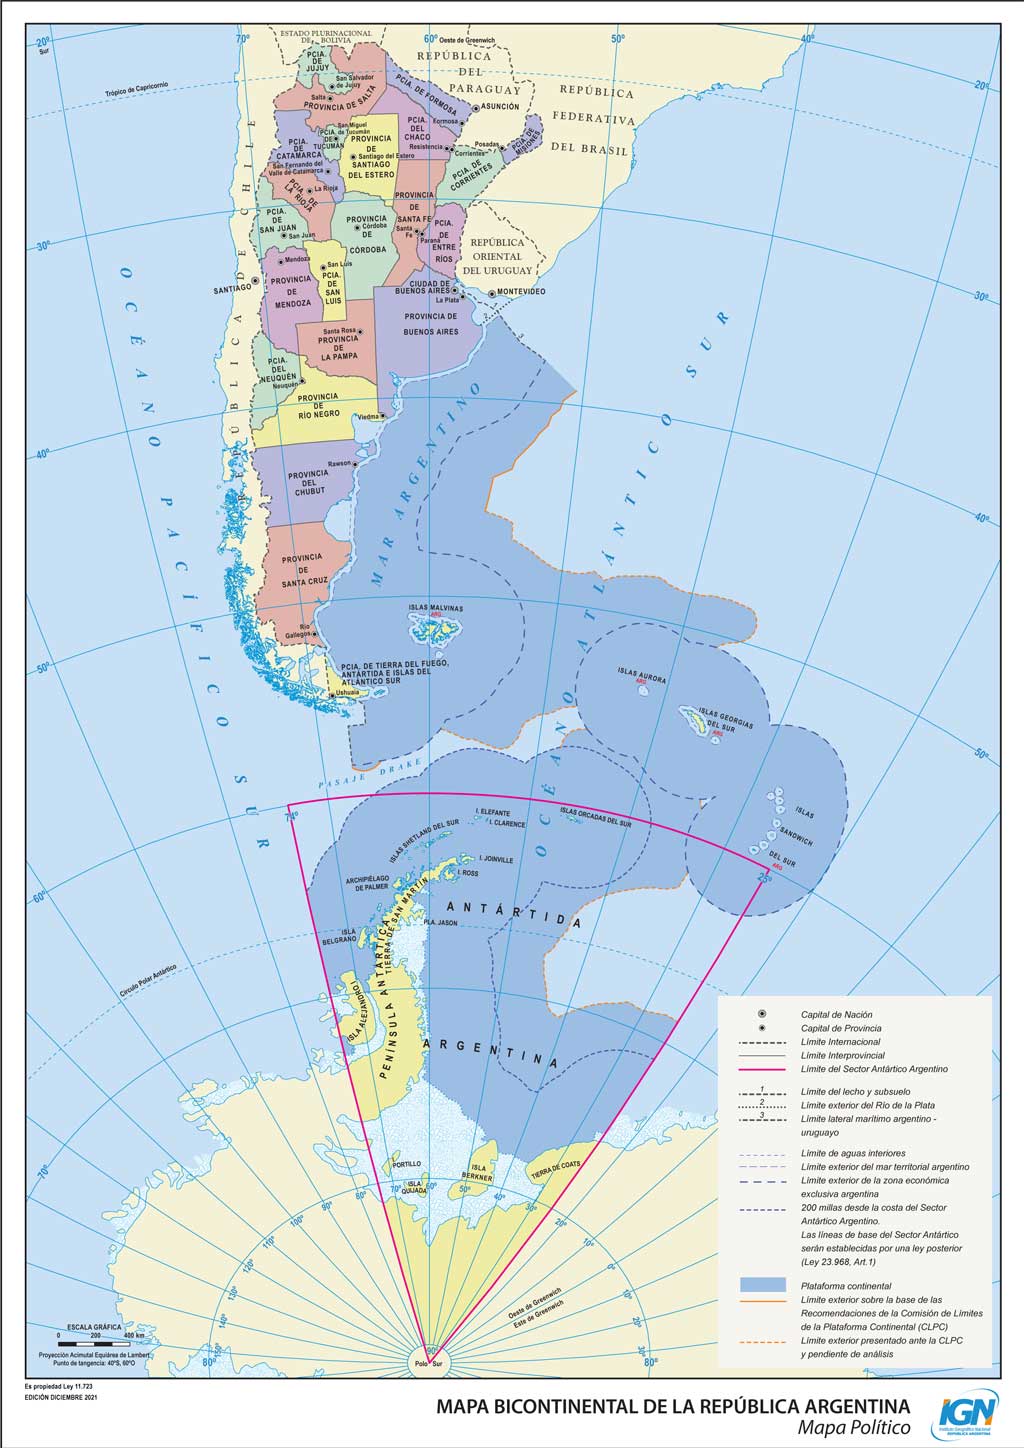 Mapa bicontinental de la República Argentina (2021)